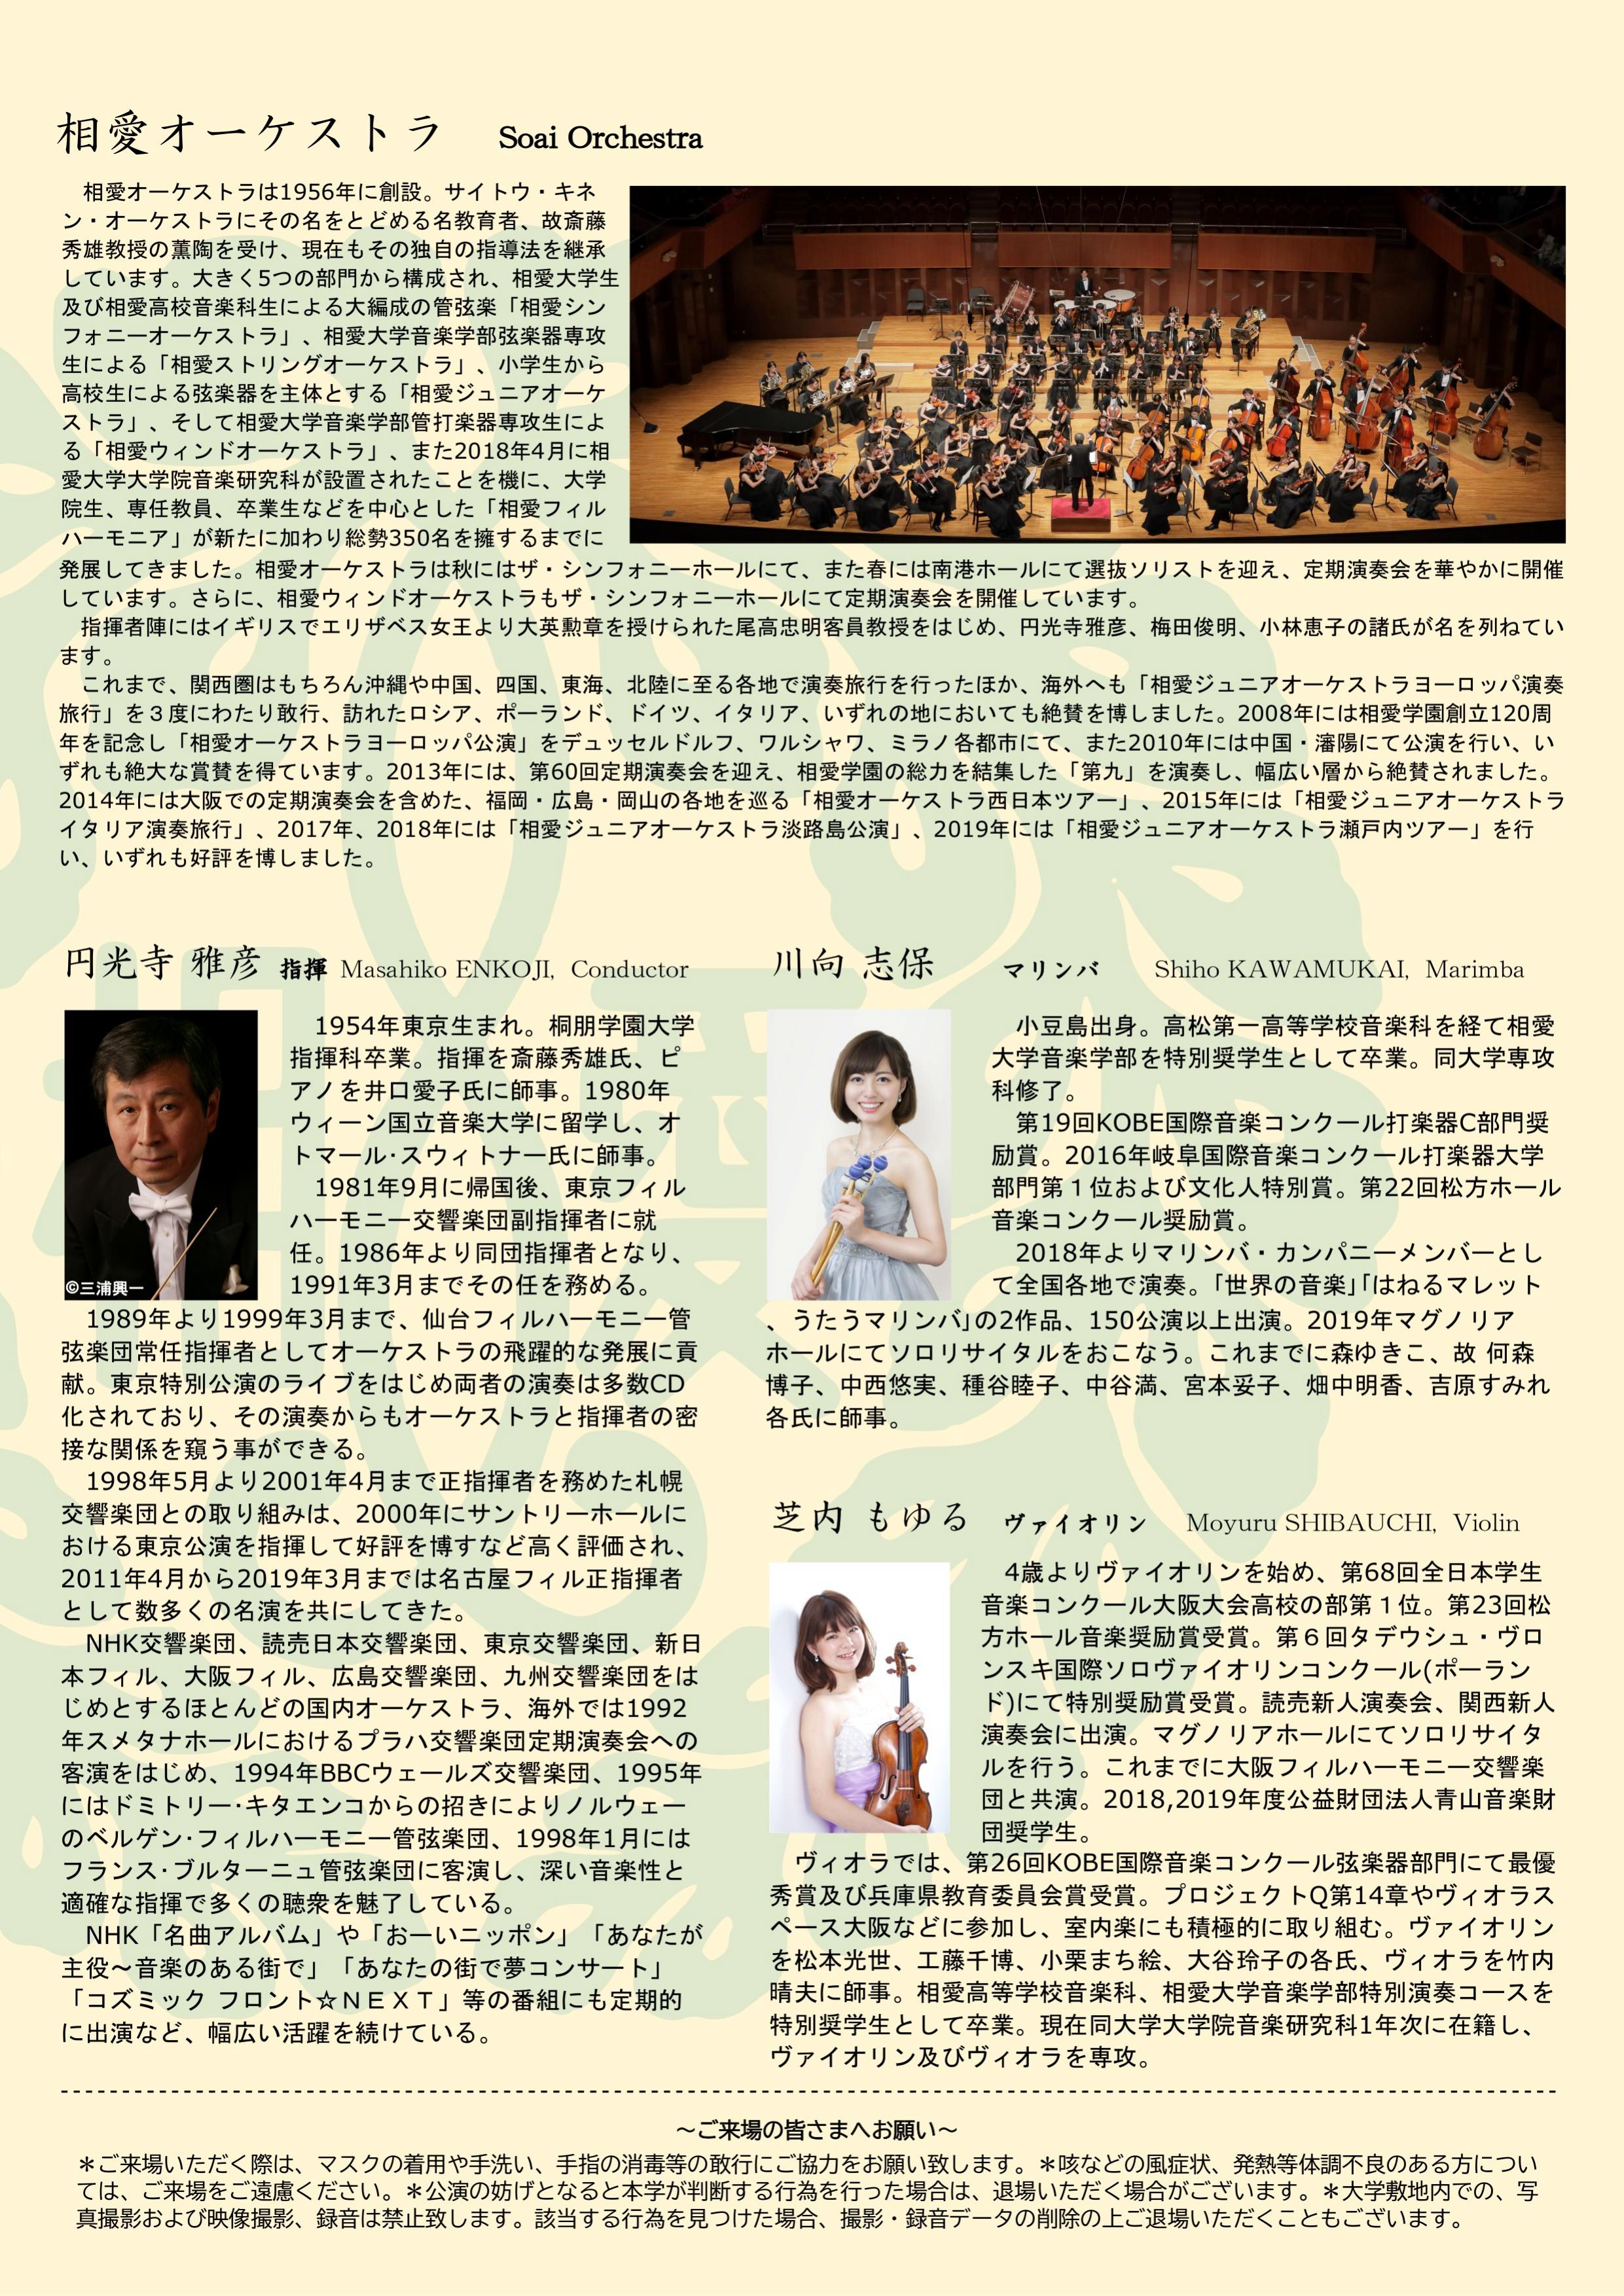 https://www.soai.ac.jp/information/event/20210306_soaiorchestra_ura.jpg